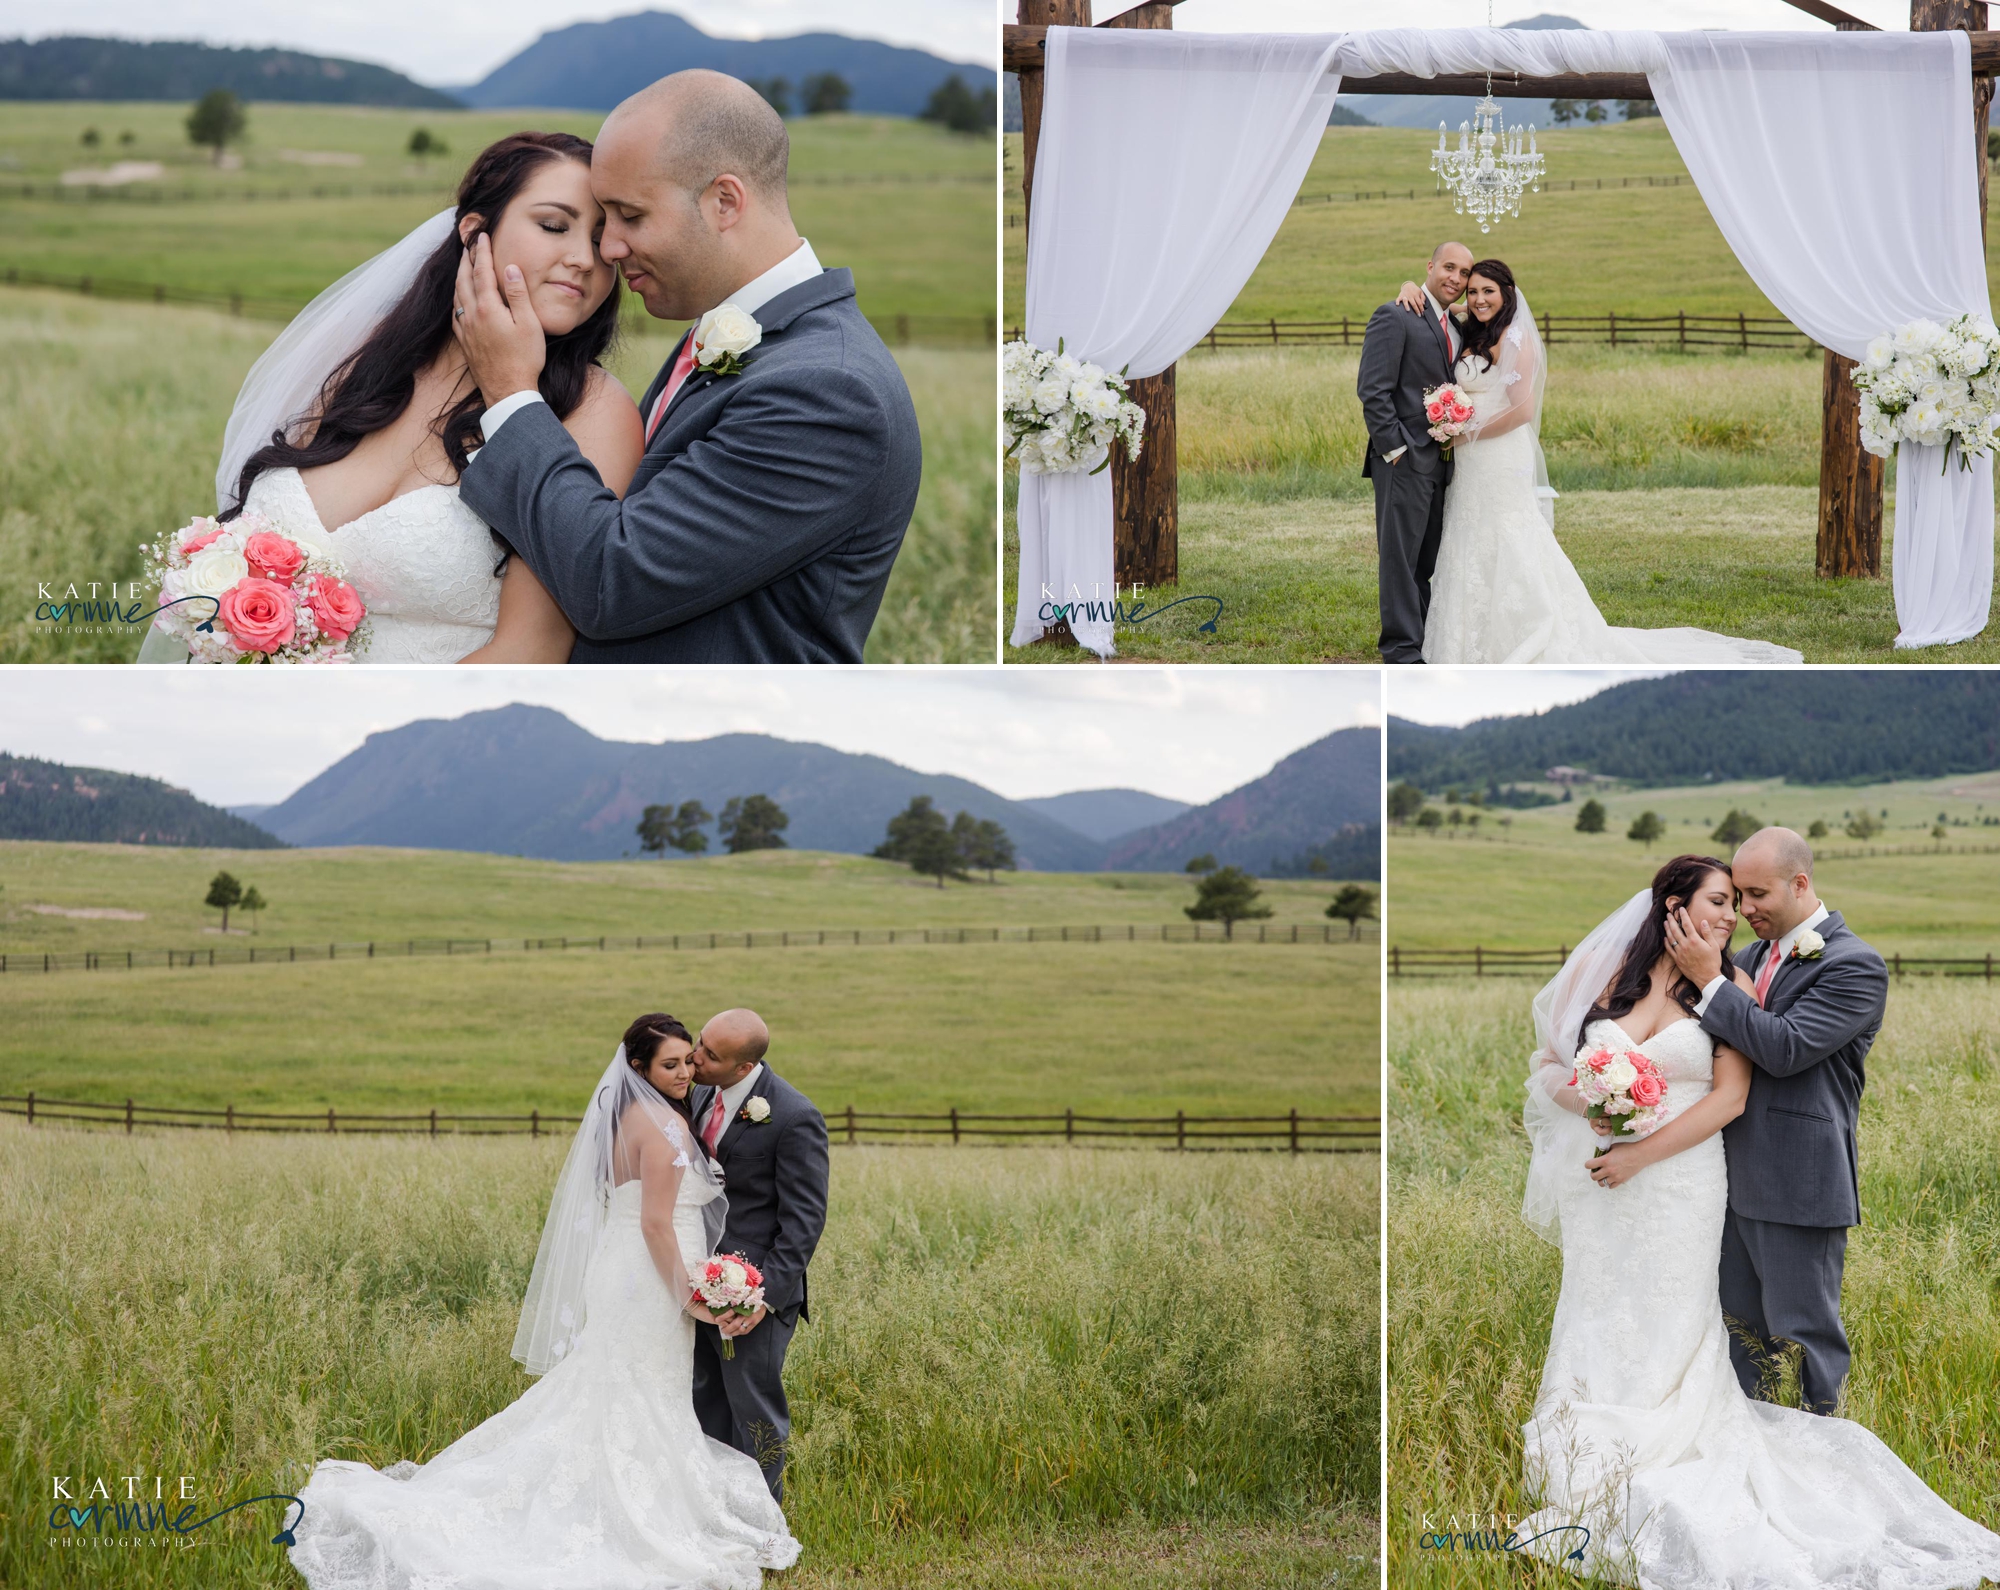 Intimate Spruce Mountain Ranch Couples Photos